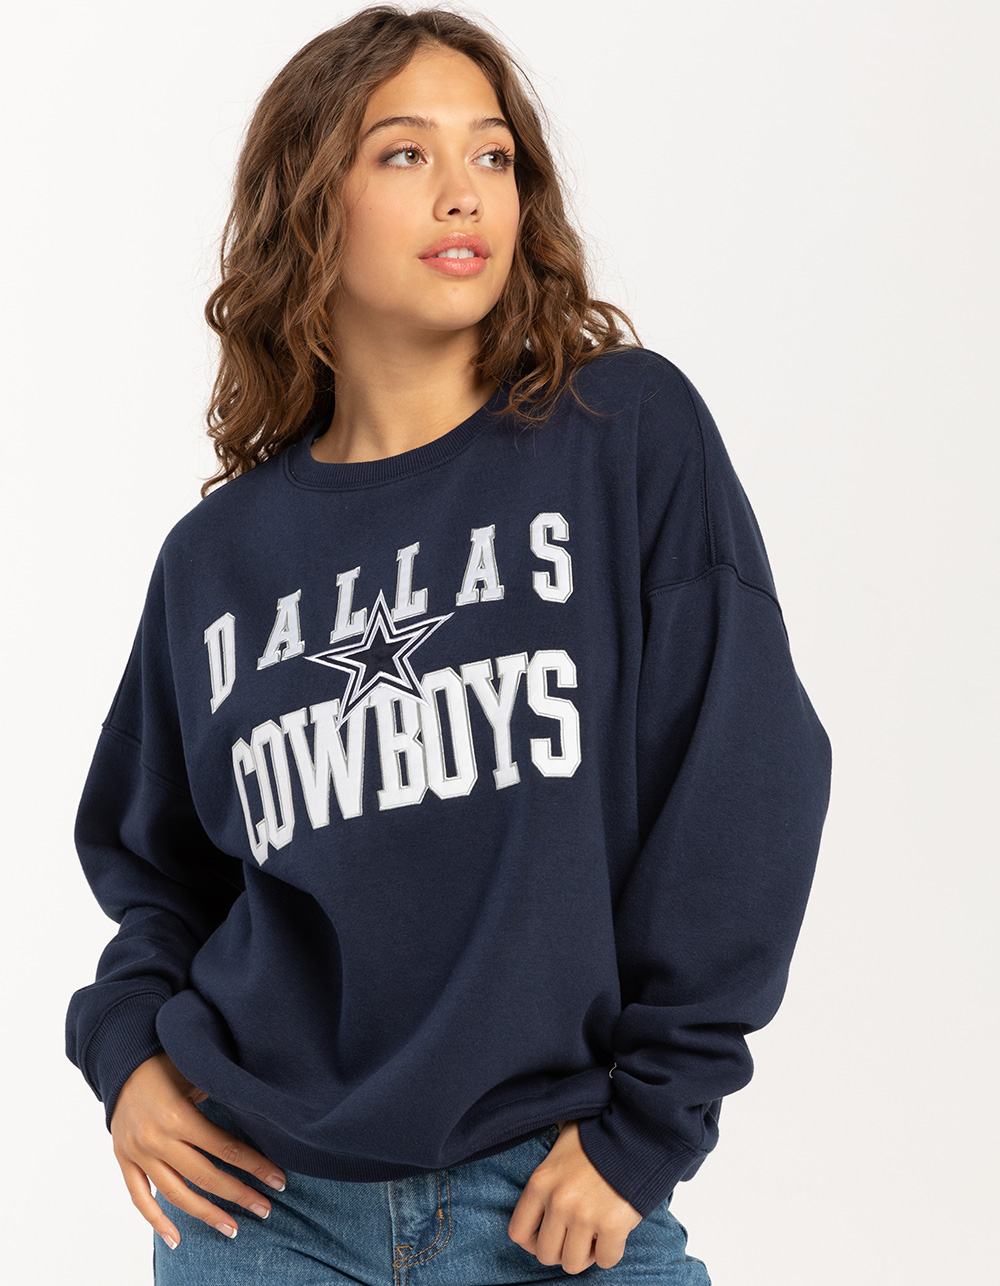 NFL Dallas Cowboys Embroidered Womens Crewneck Sweatshirt - NAVY